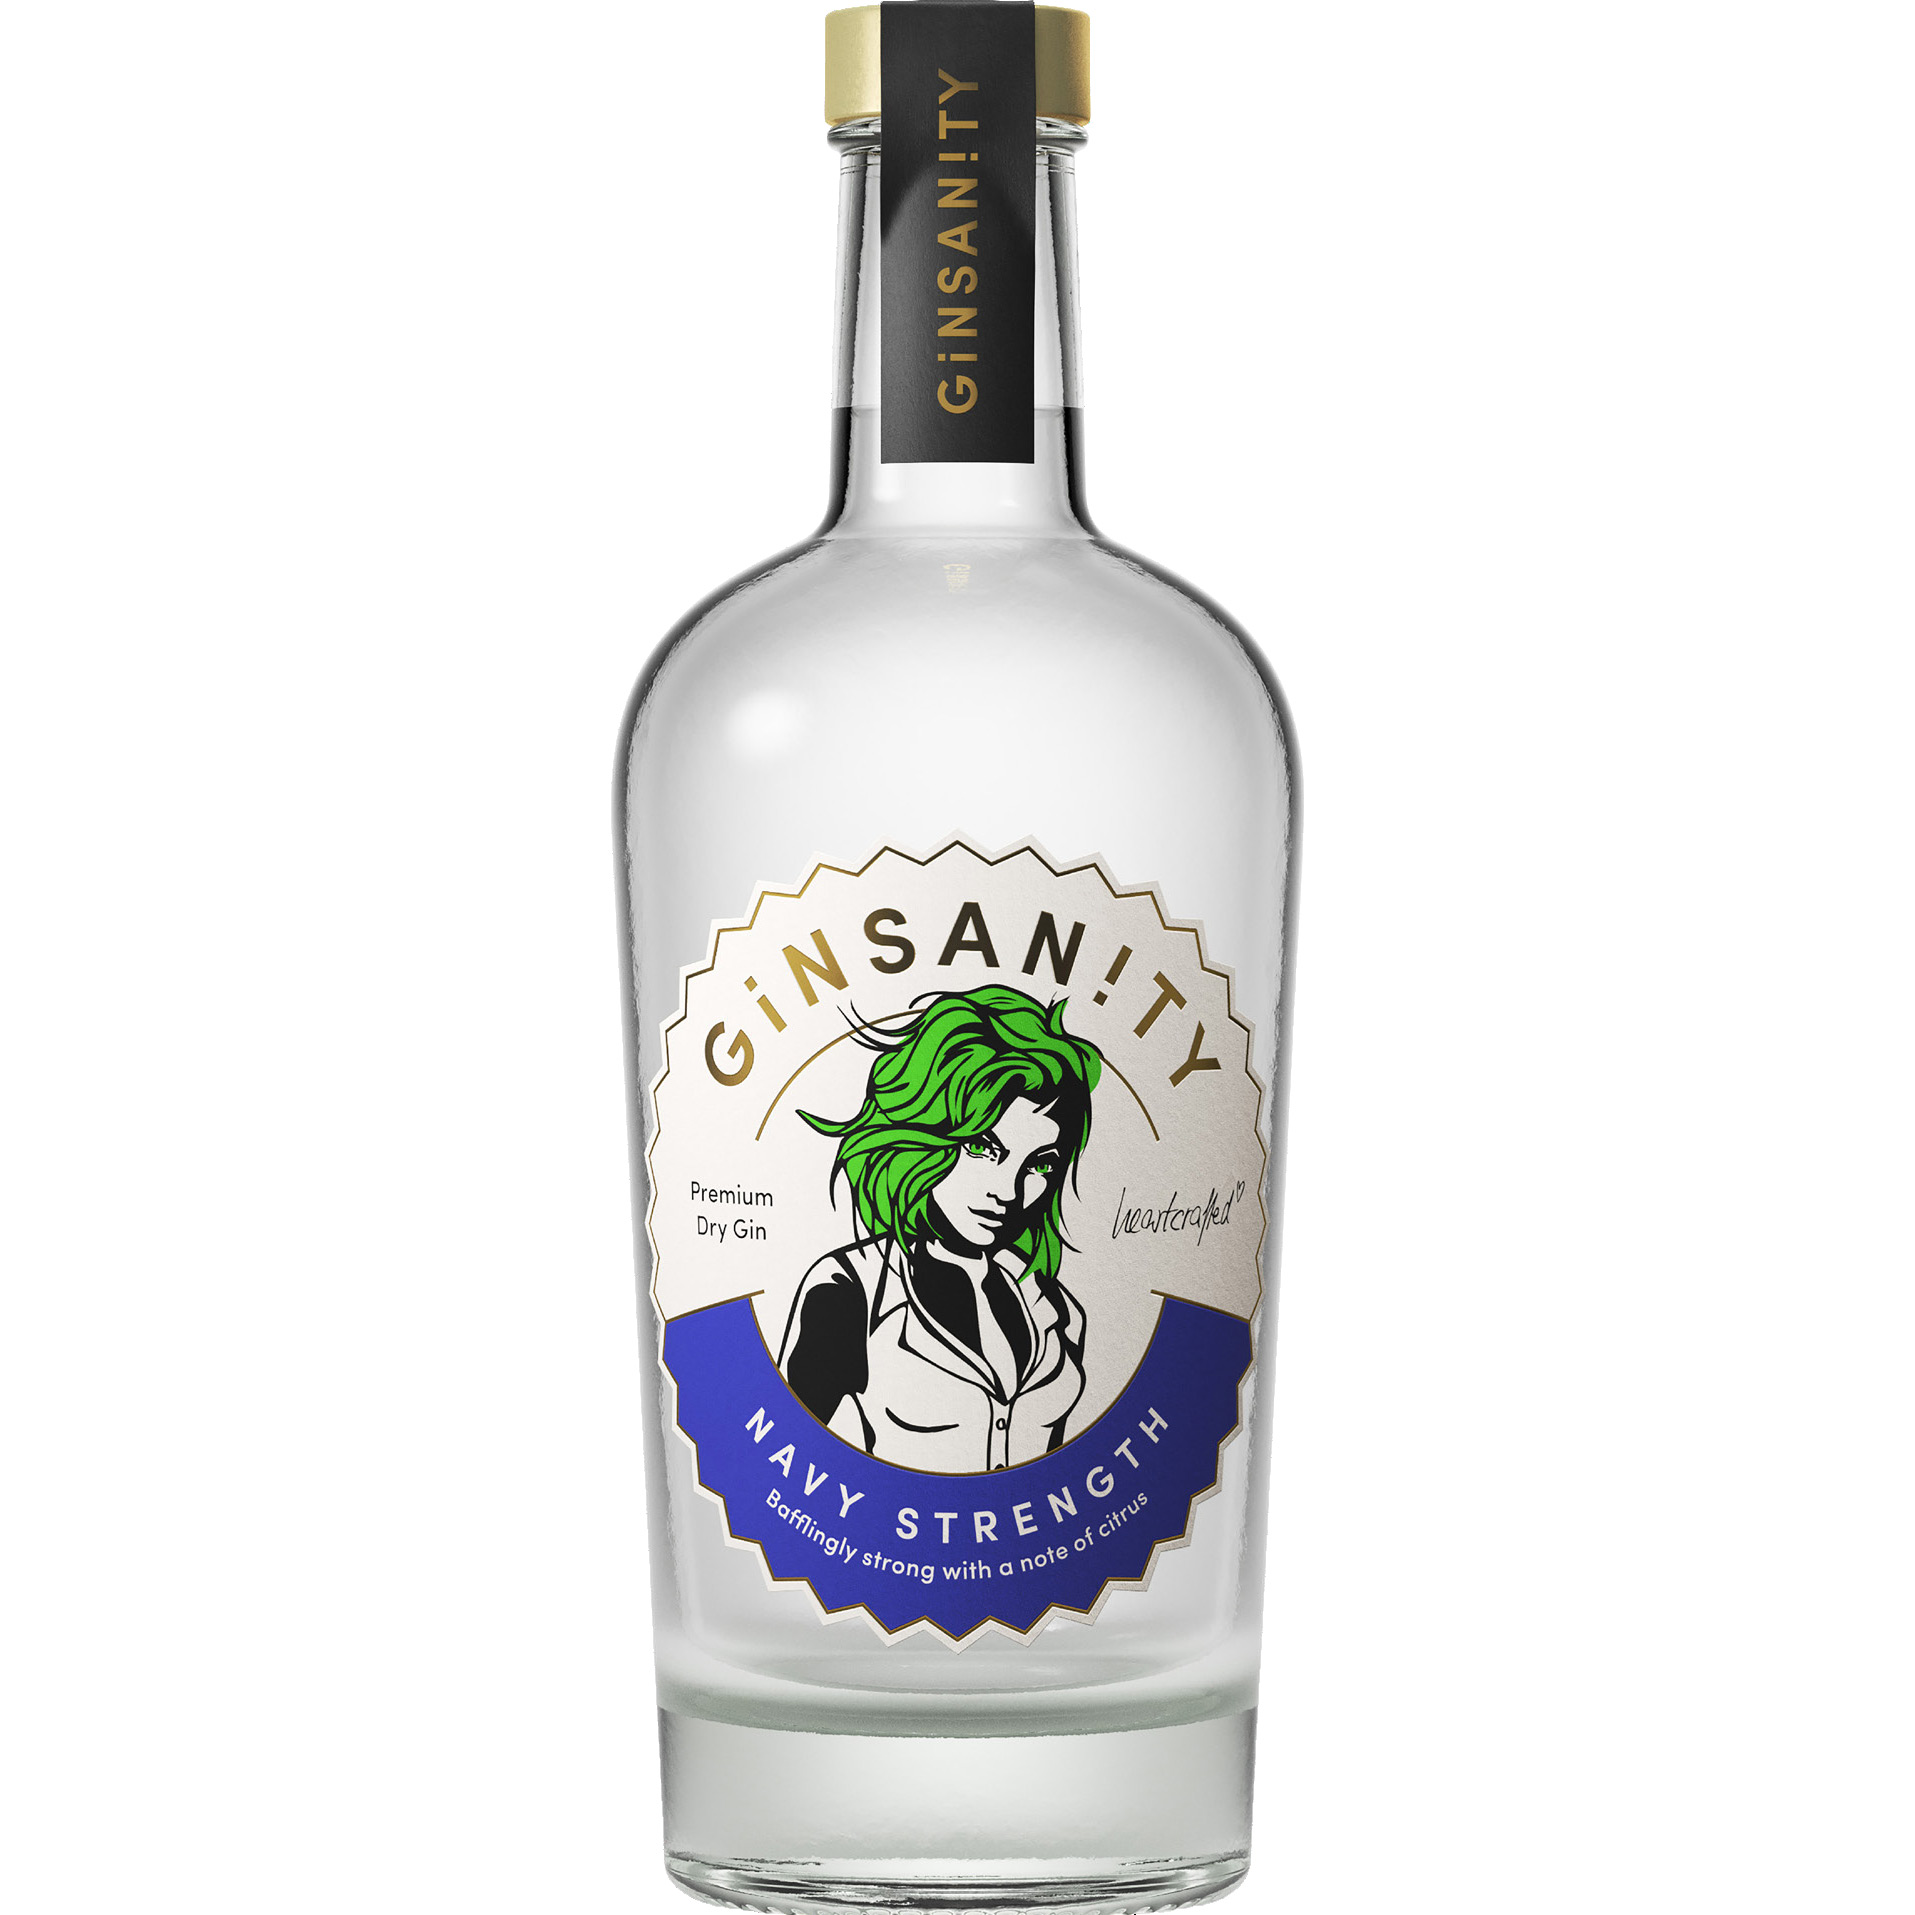 Se Ginsanity Premium Dry Gin Navy Strength hos Løvegården